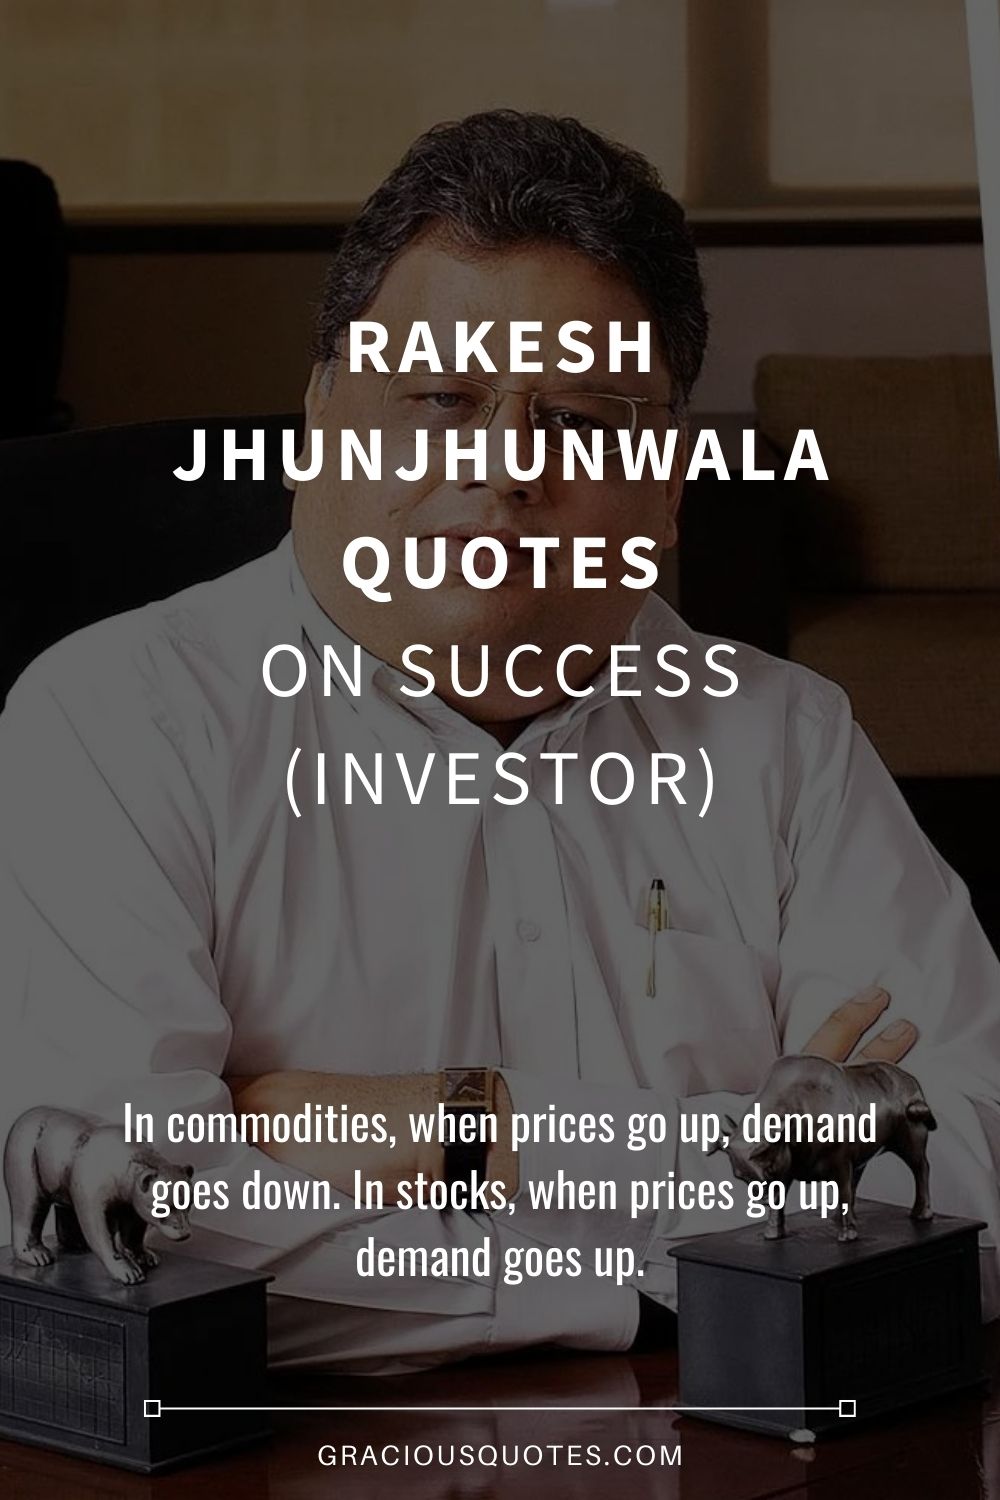 Rakesh Jhunjhunwala quotes on Success (INVESTOR) - Gracious Quotes